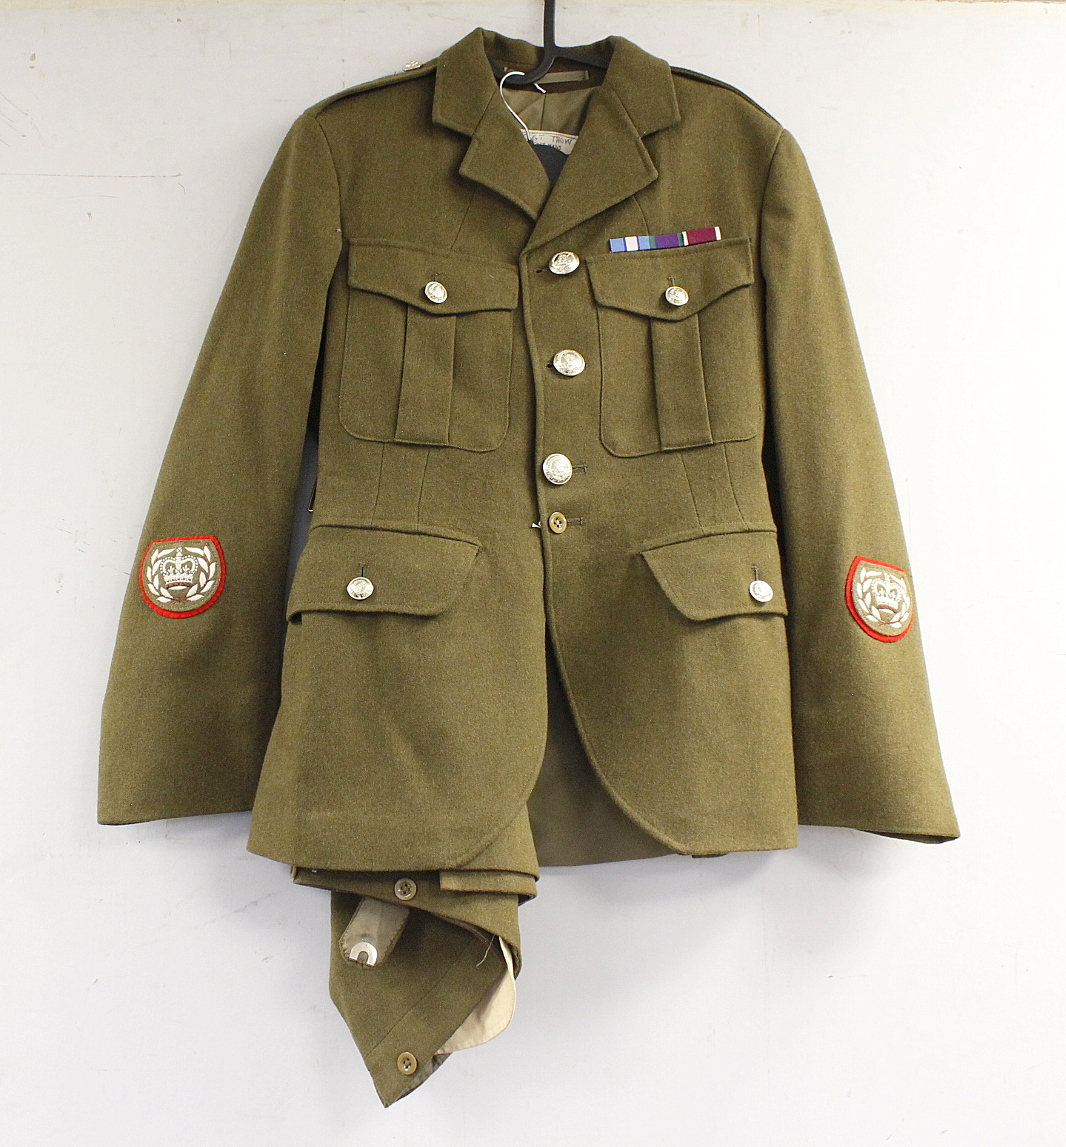 British Army dress uniform jacket having H Edgard & Sons Ltd label "CSGT Thow Mar 84", Gordon